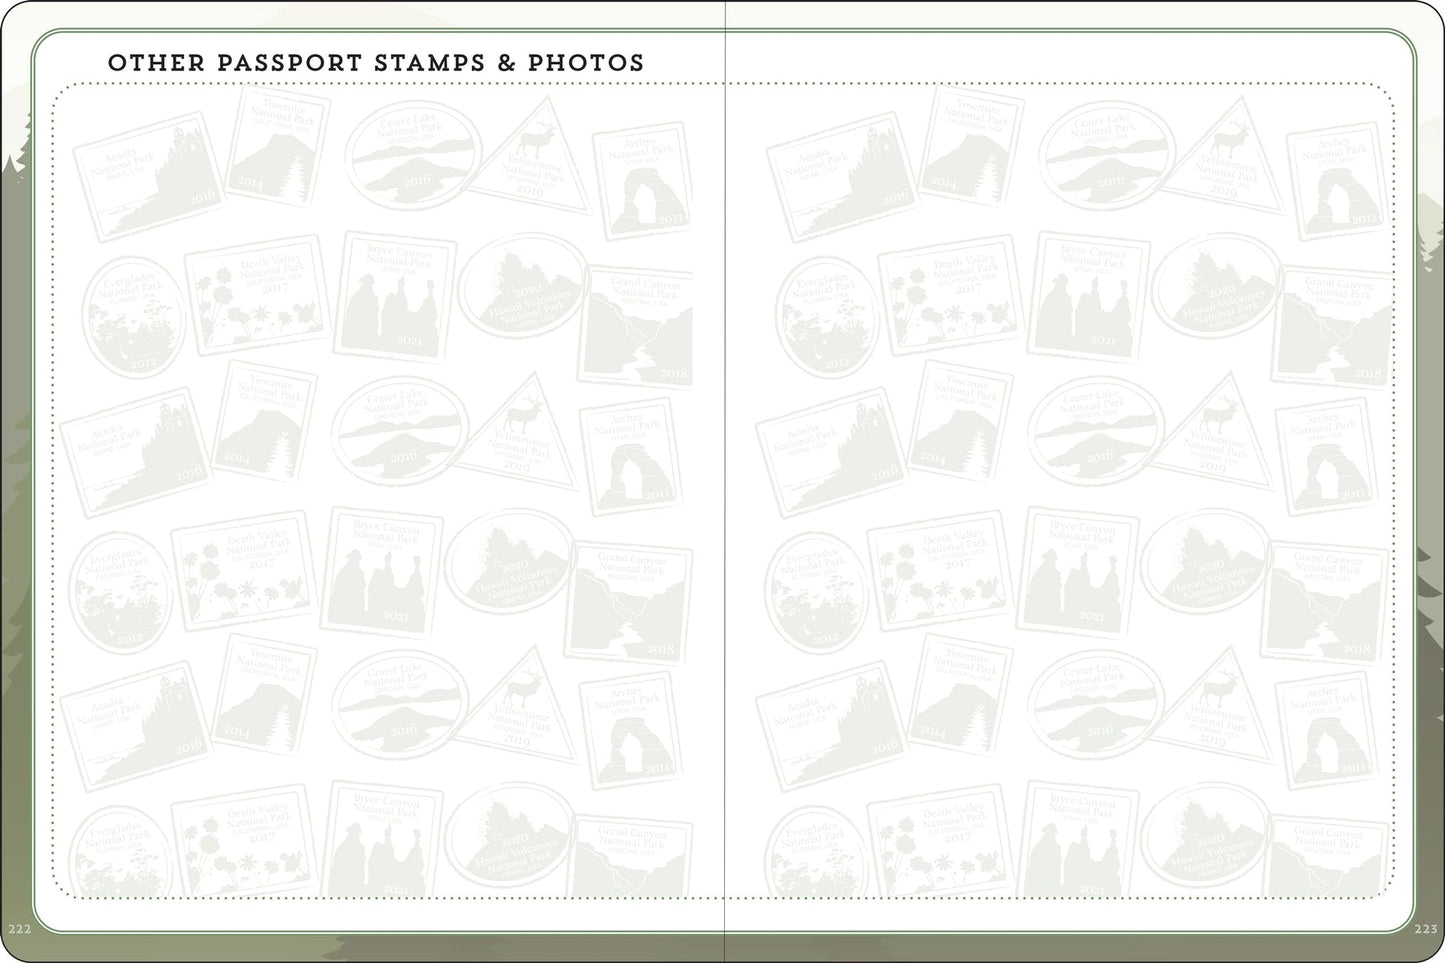 Peter Pauper Press - USA National Parks Journal And Passport Stamp Book